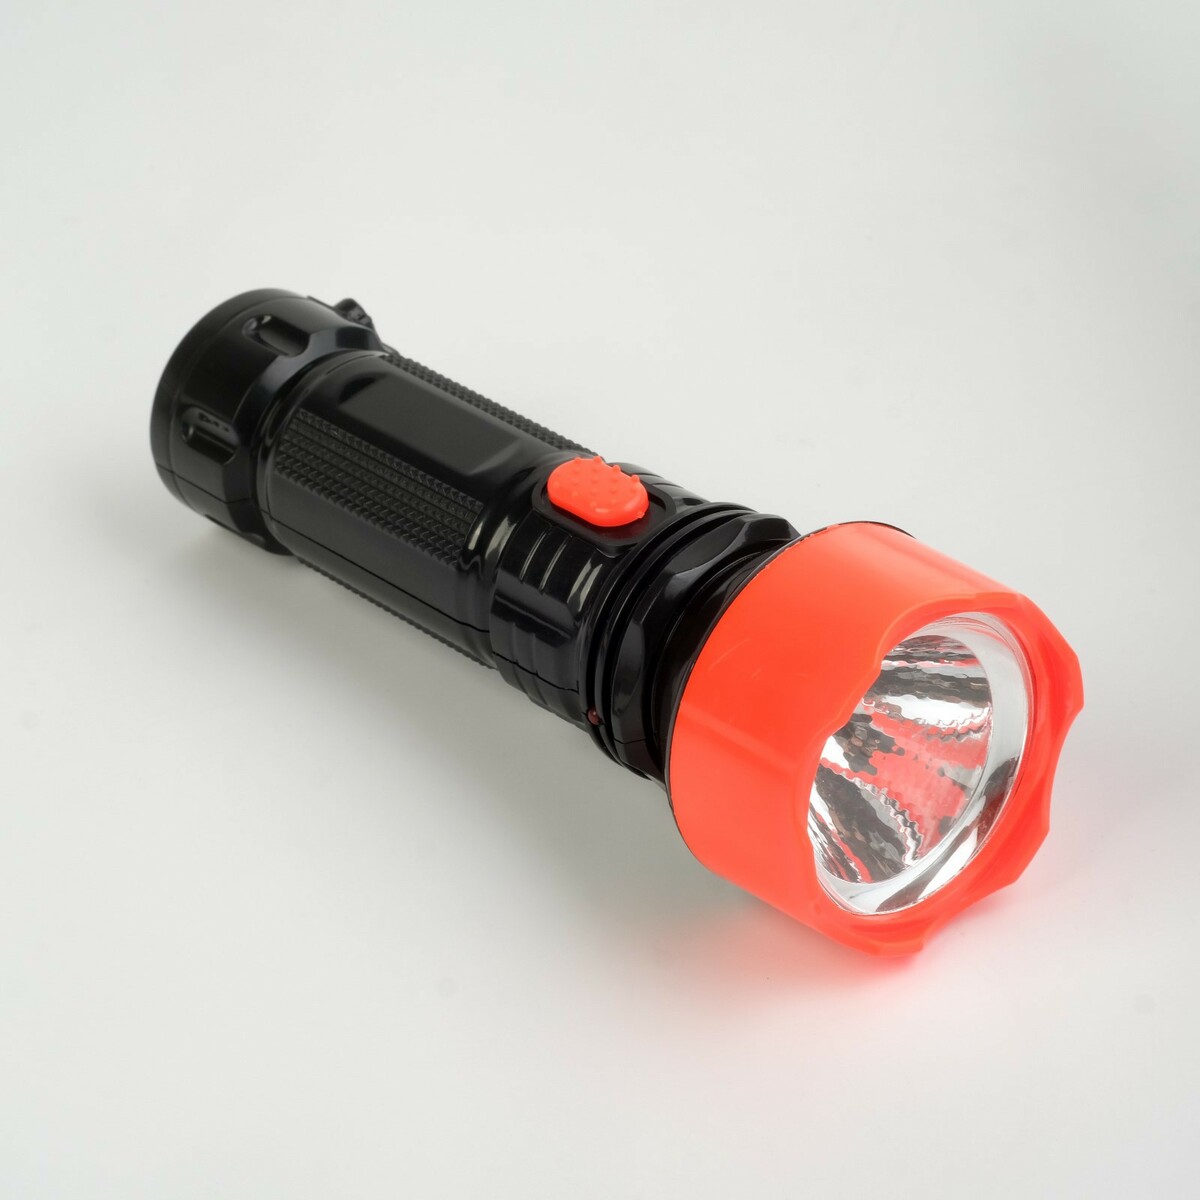 Фонарь ручной аккумуляторный, 1 led, 16.5 х 5.7 х 5.7, от сети, красно-черный фонарь ручной аккумуляторный 1 вт 300 мач led динамо зарядка